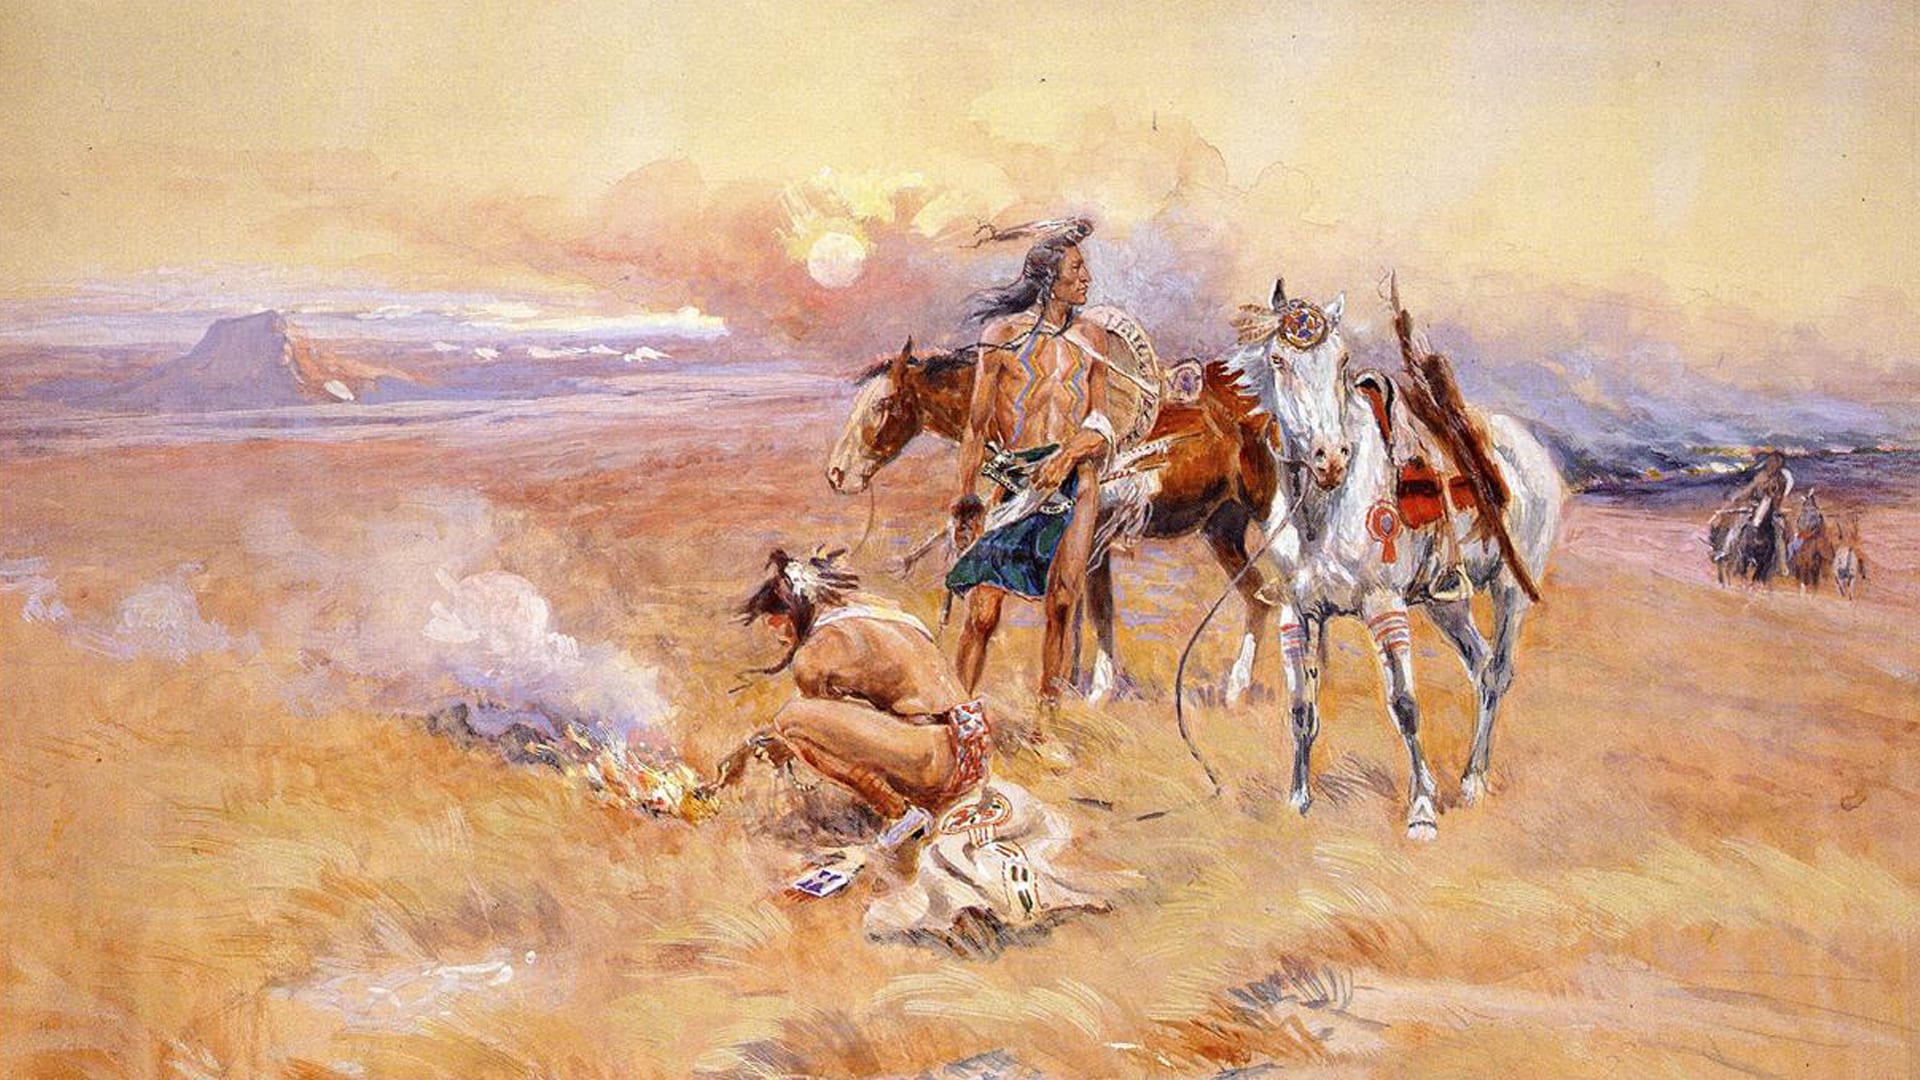 Blackfeet Burning Crow Buffalo Range, painting by Charles Marion Russell, 1905.